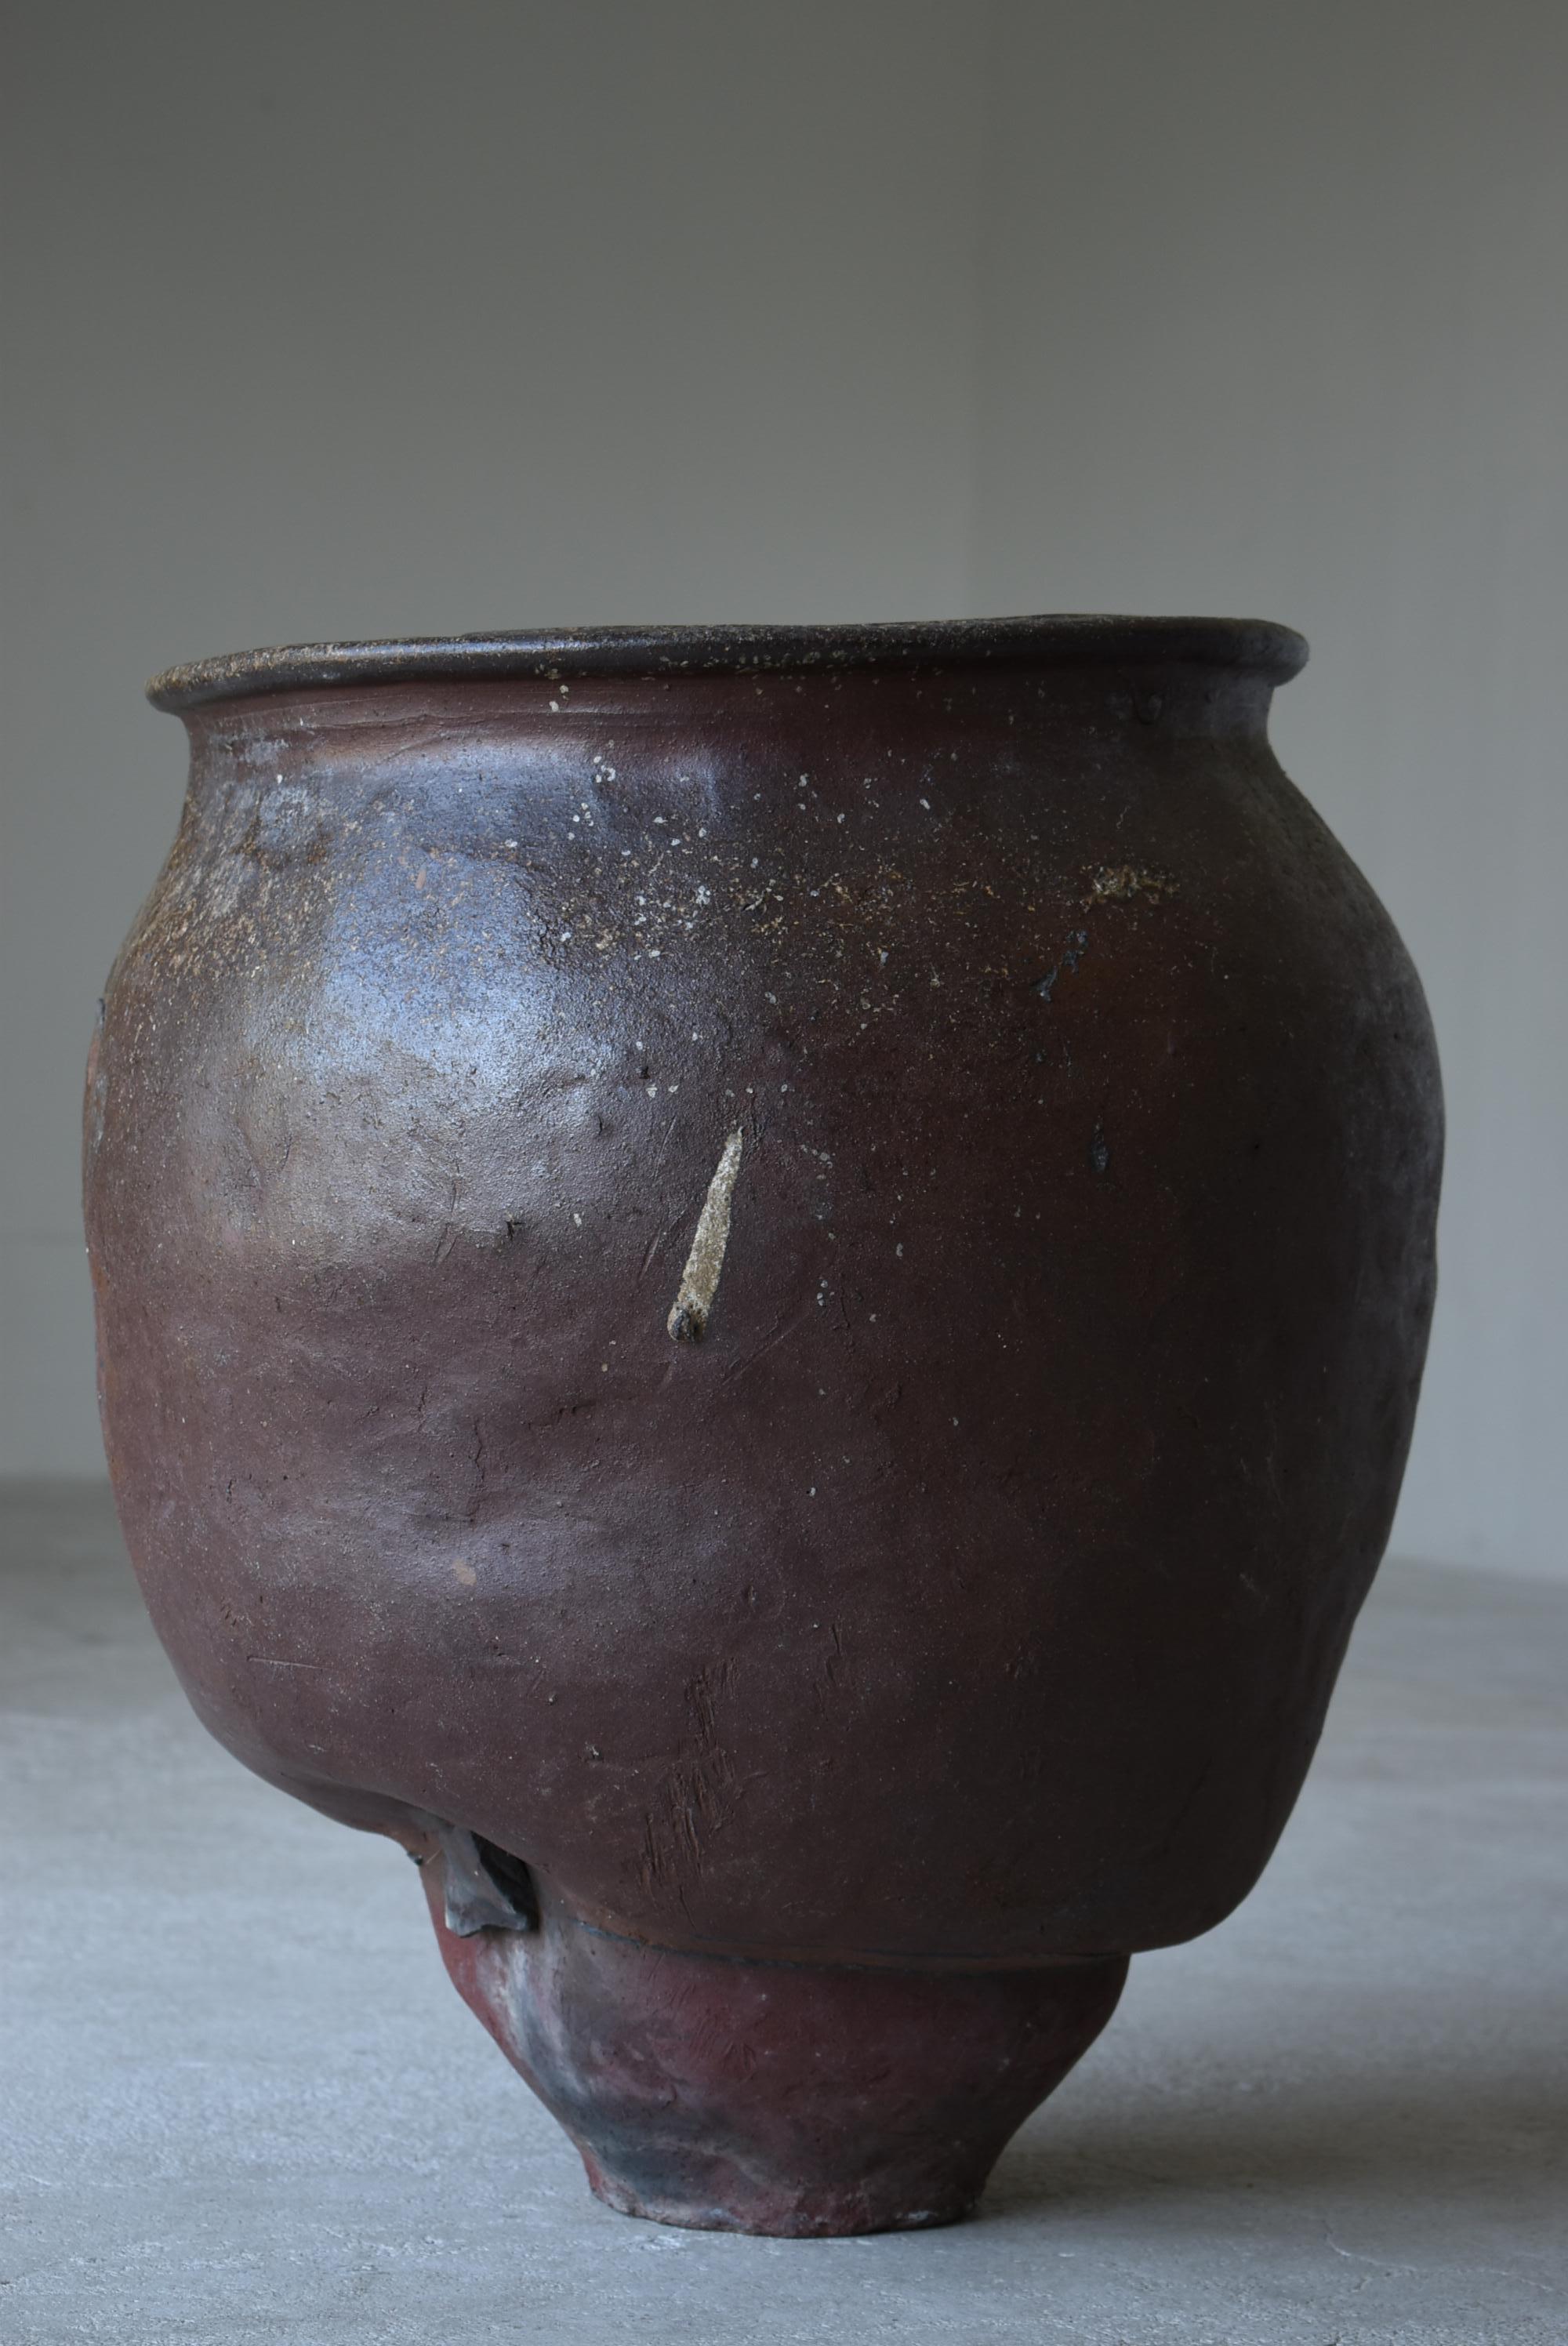 19th Century Japanese Old Pottery 1700s-1800s/Antique Flower Vase Vessel Jar Tsubo Wabisabi